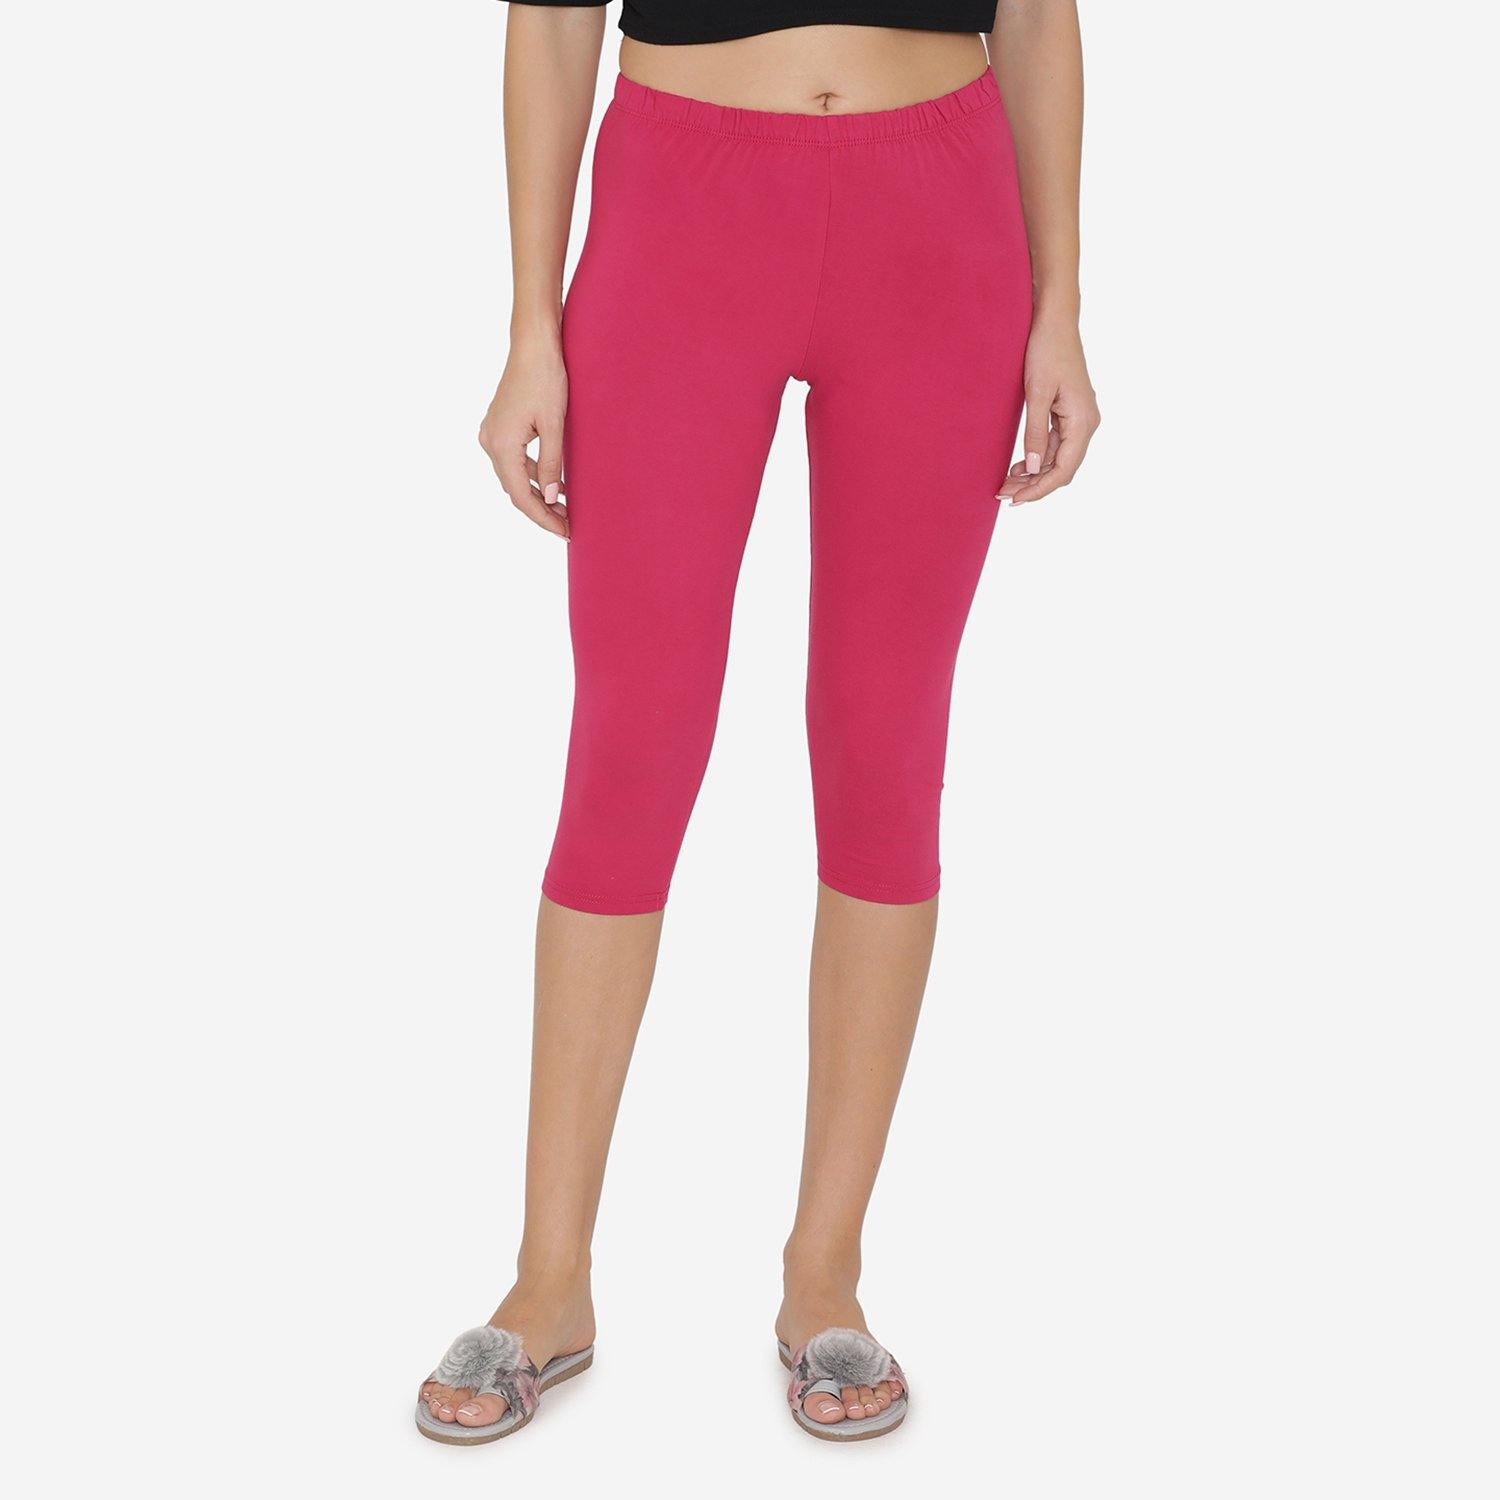 Retro Style Hot Pink High Waist Capri Pants on Stylevore